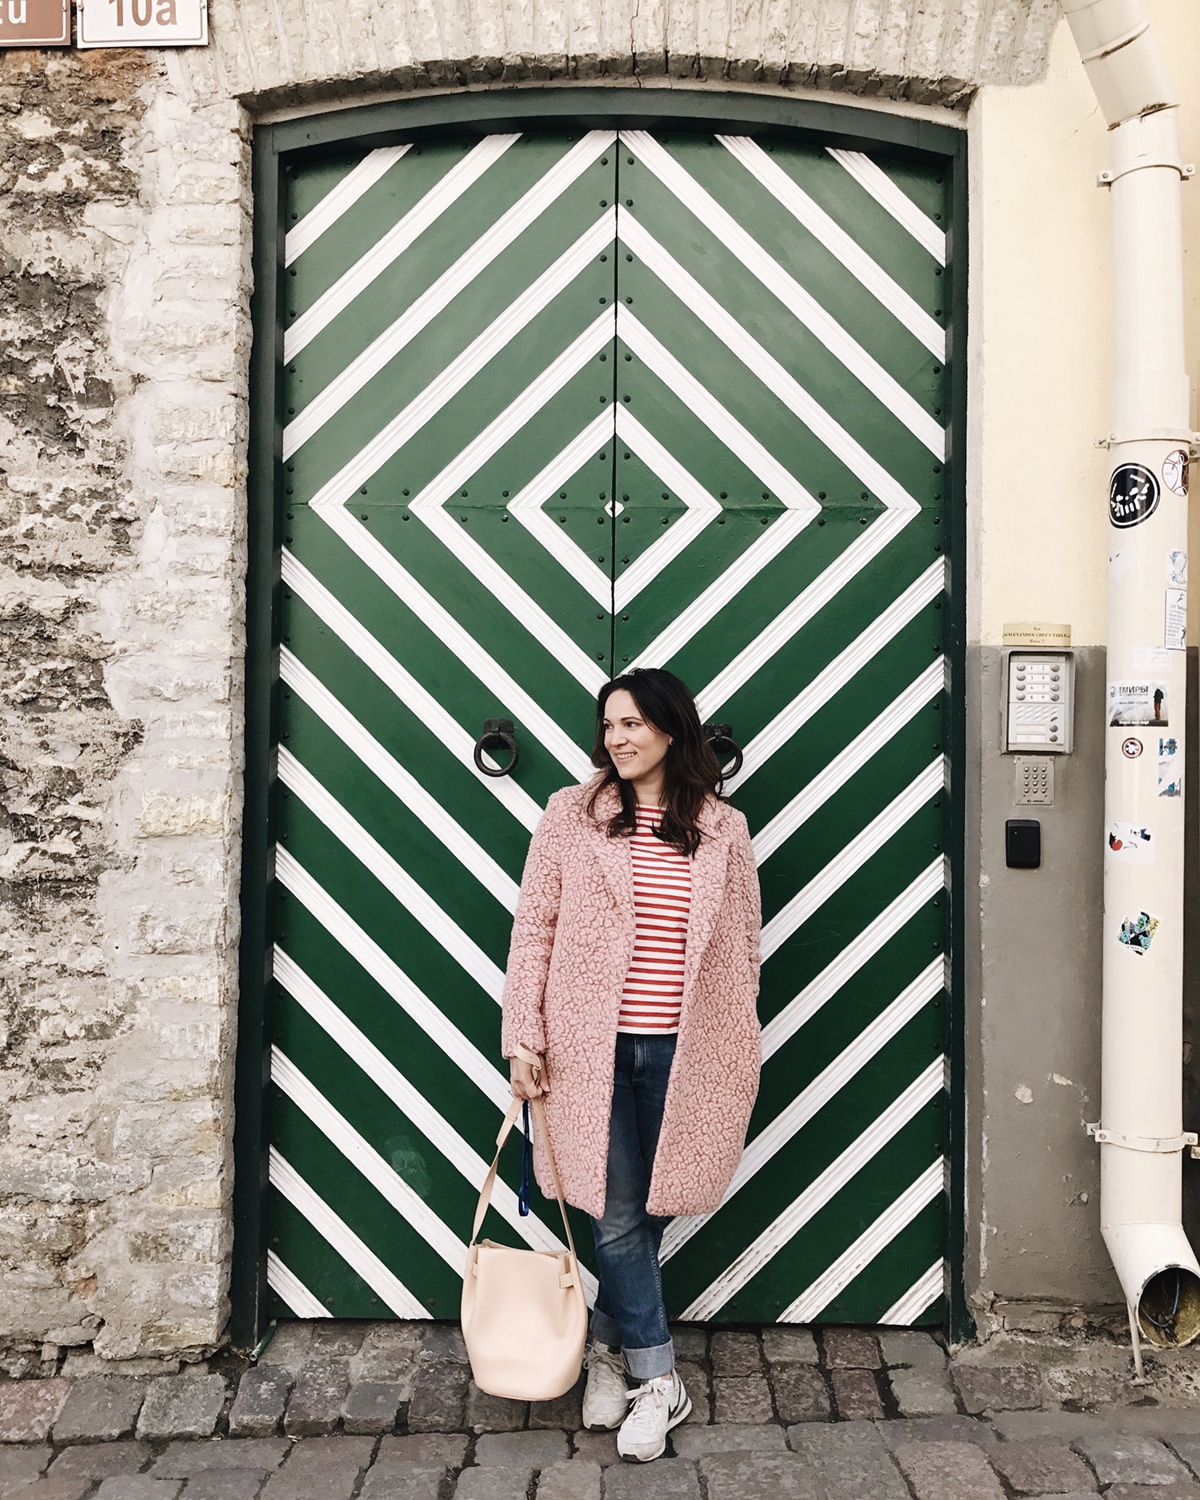 see the pastel walls and beautiful doors of Tallin, Estonia | visual travel diary on coco kelley